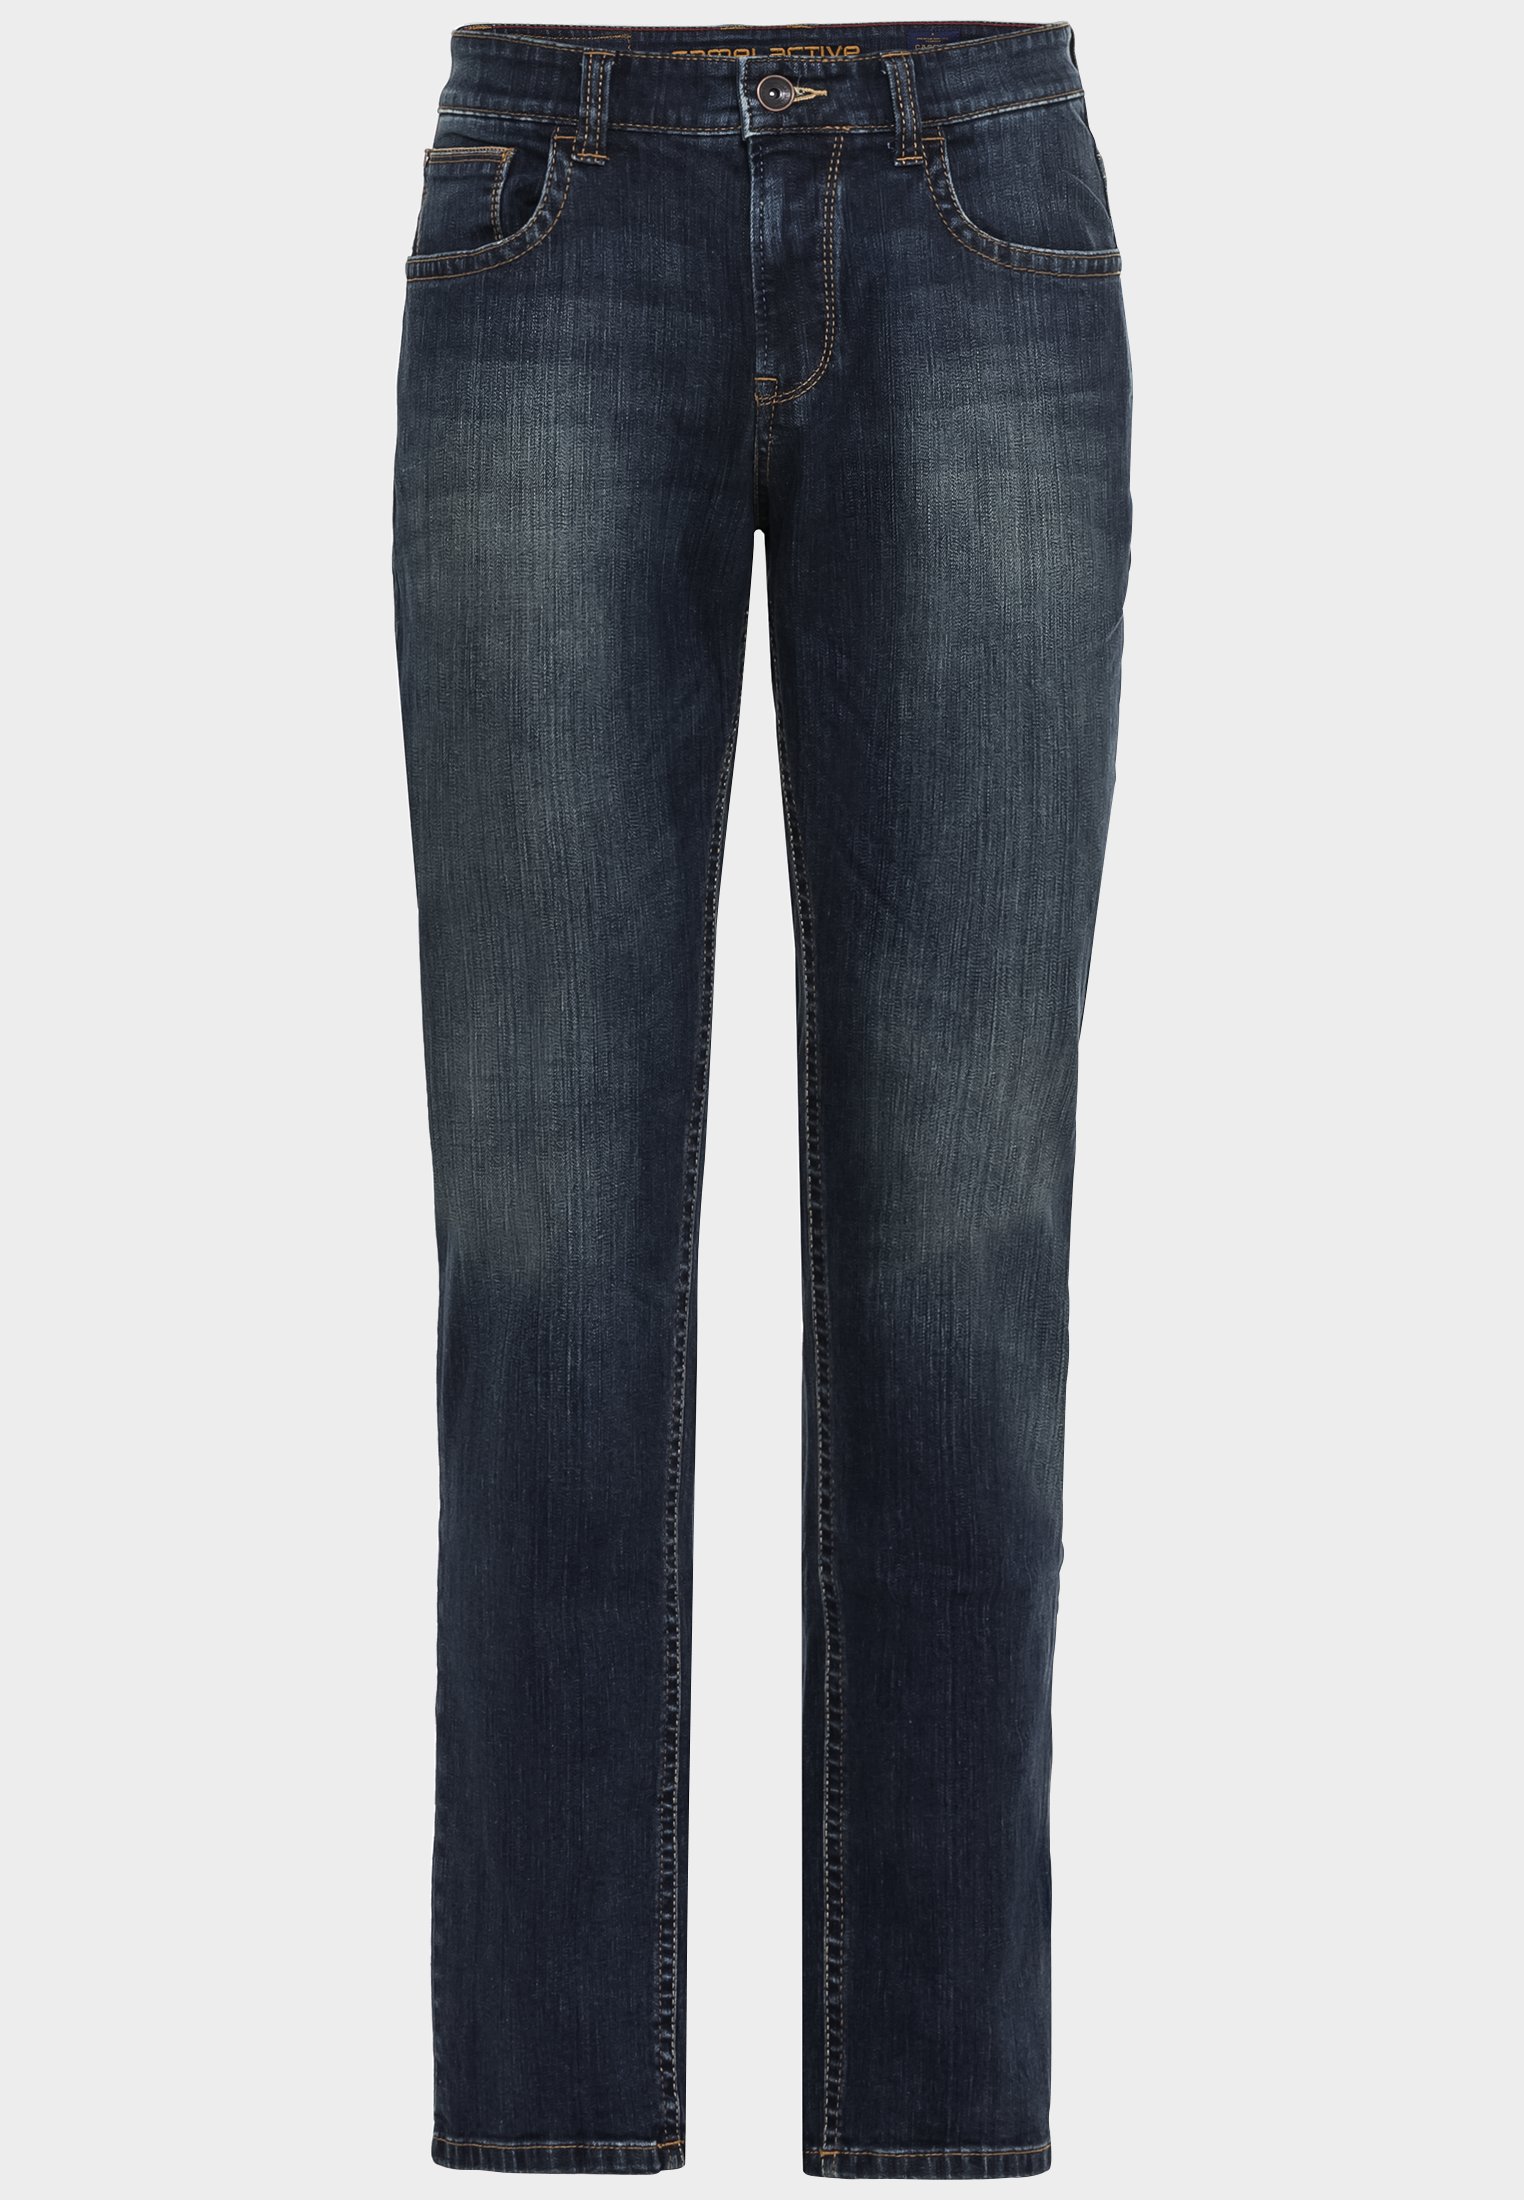 Jeans for Herren in Dark Blue, 31/34